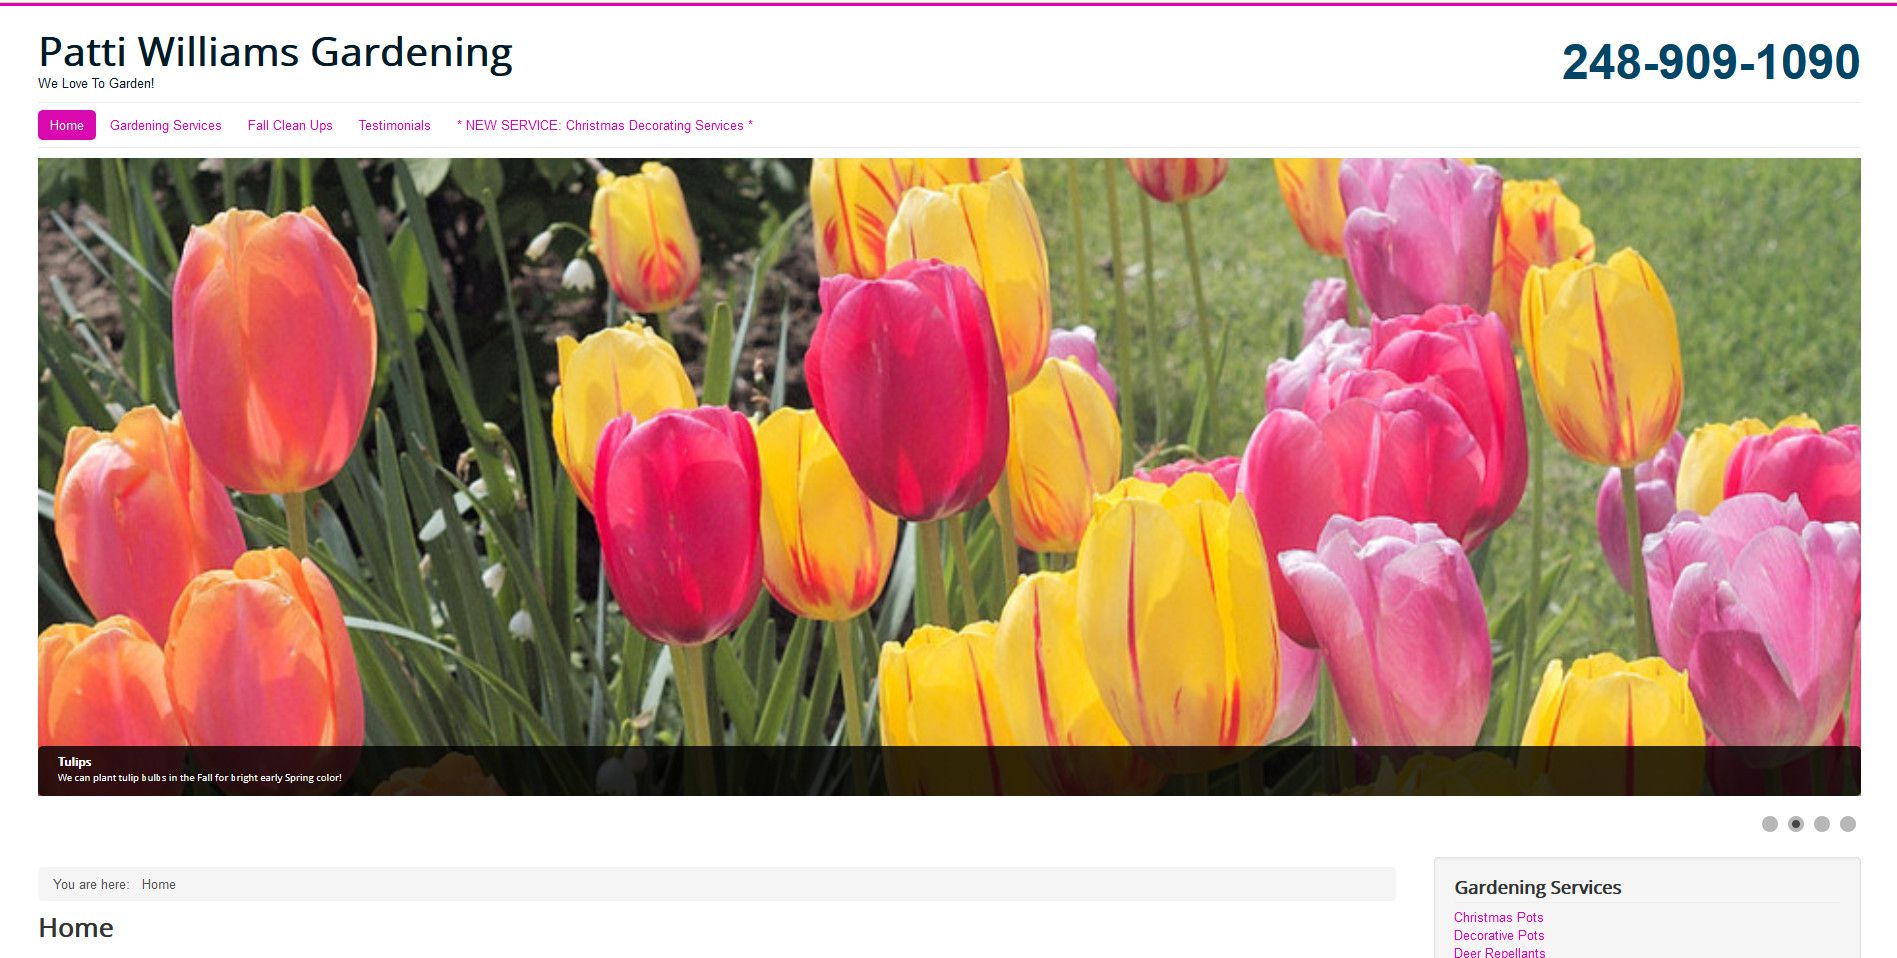 Patti Williams Gardening Screenshot.jpg